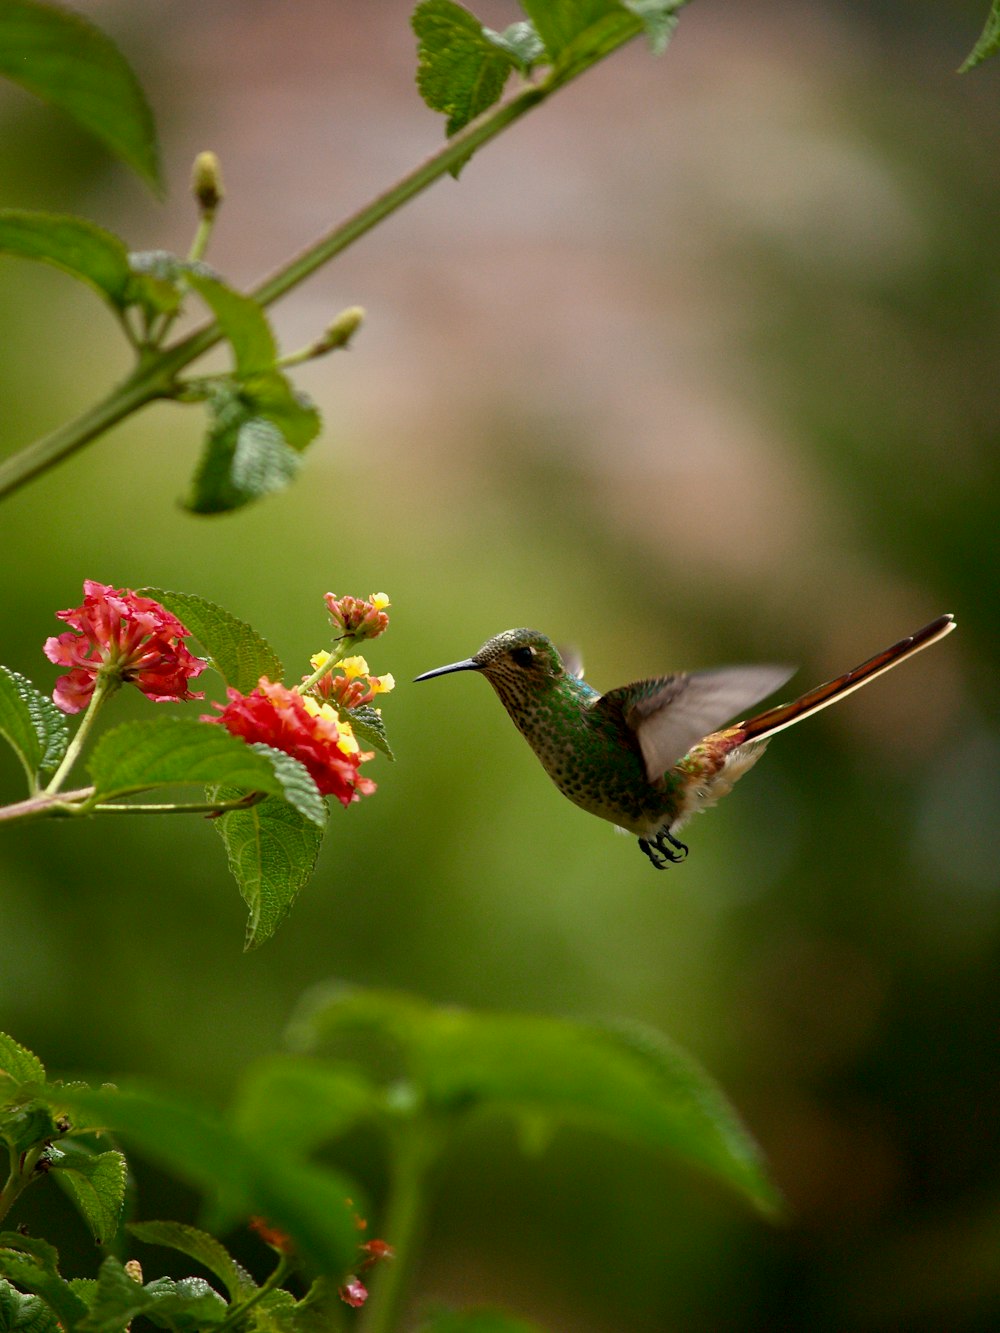 green humming bird flying over red flower